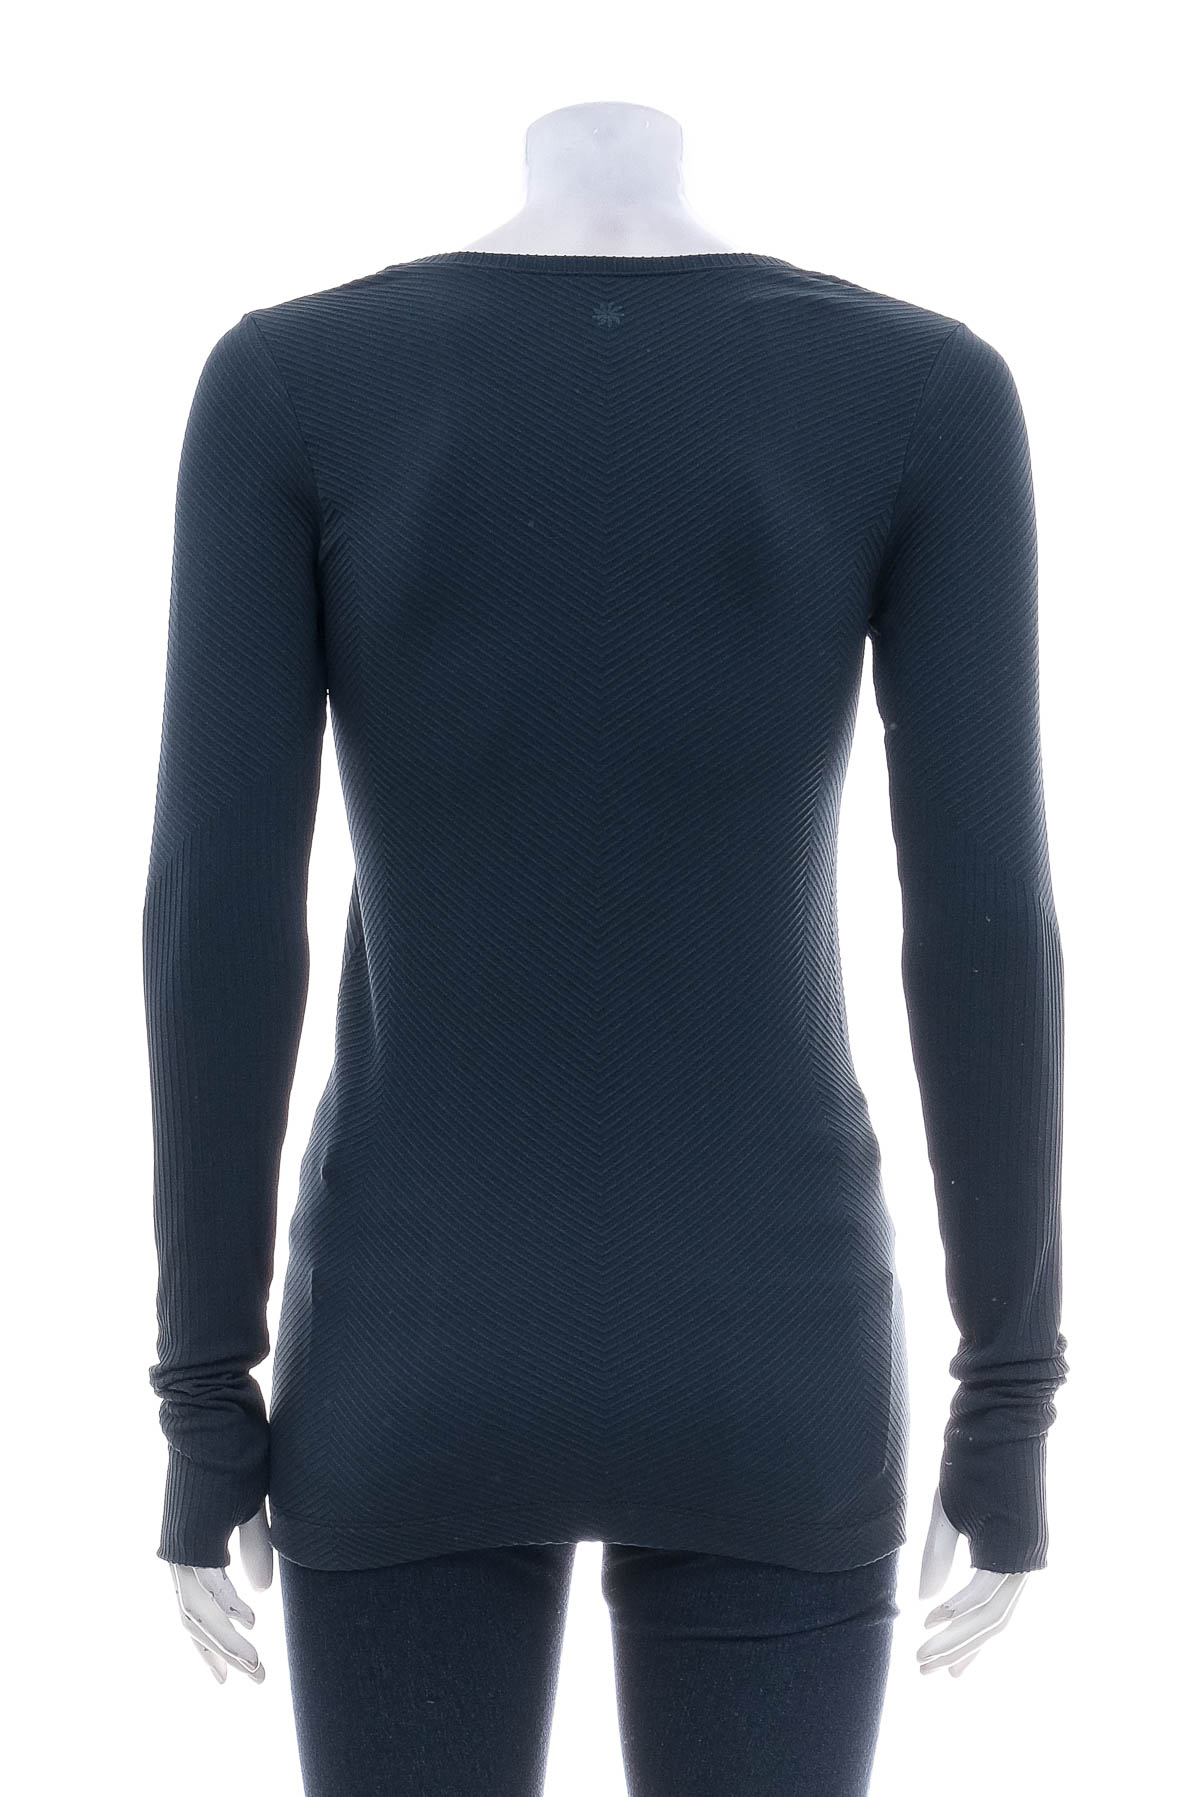 Women's sport blouse - Athleta - 1